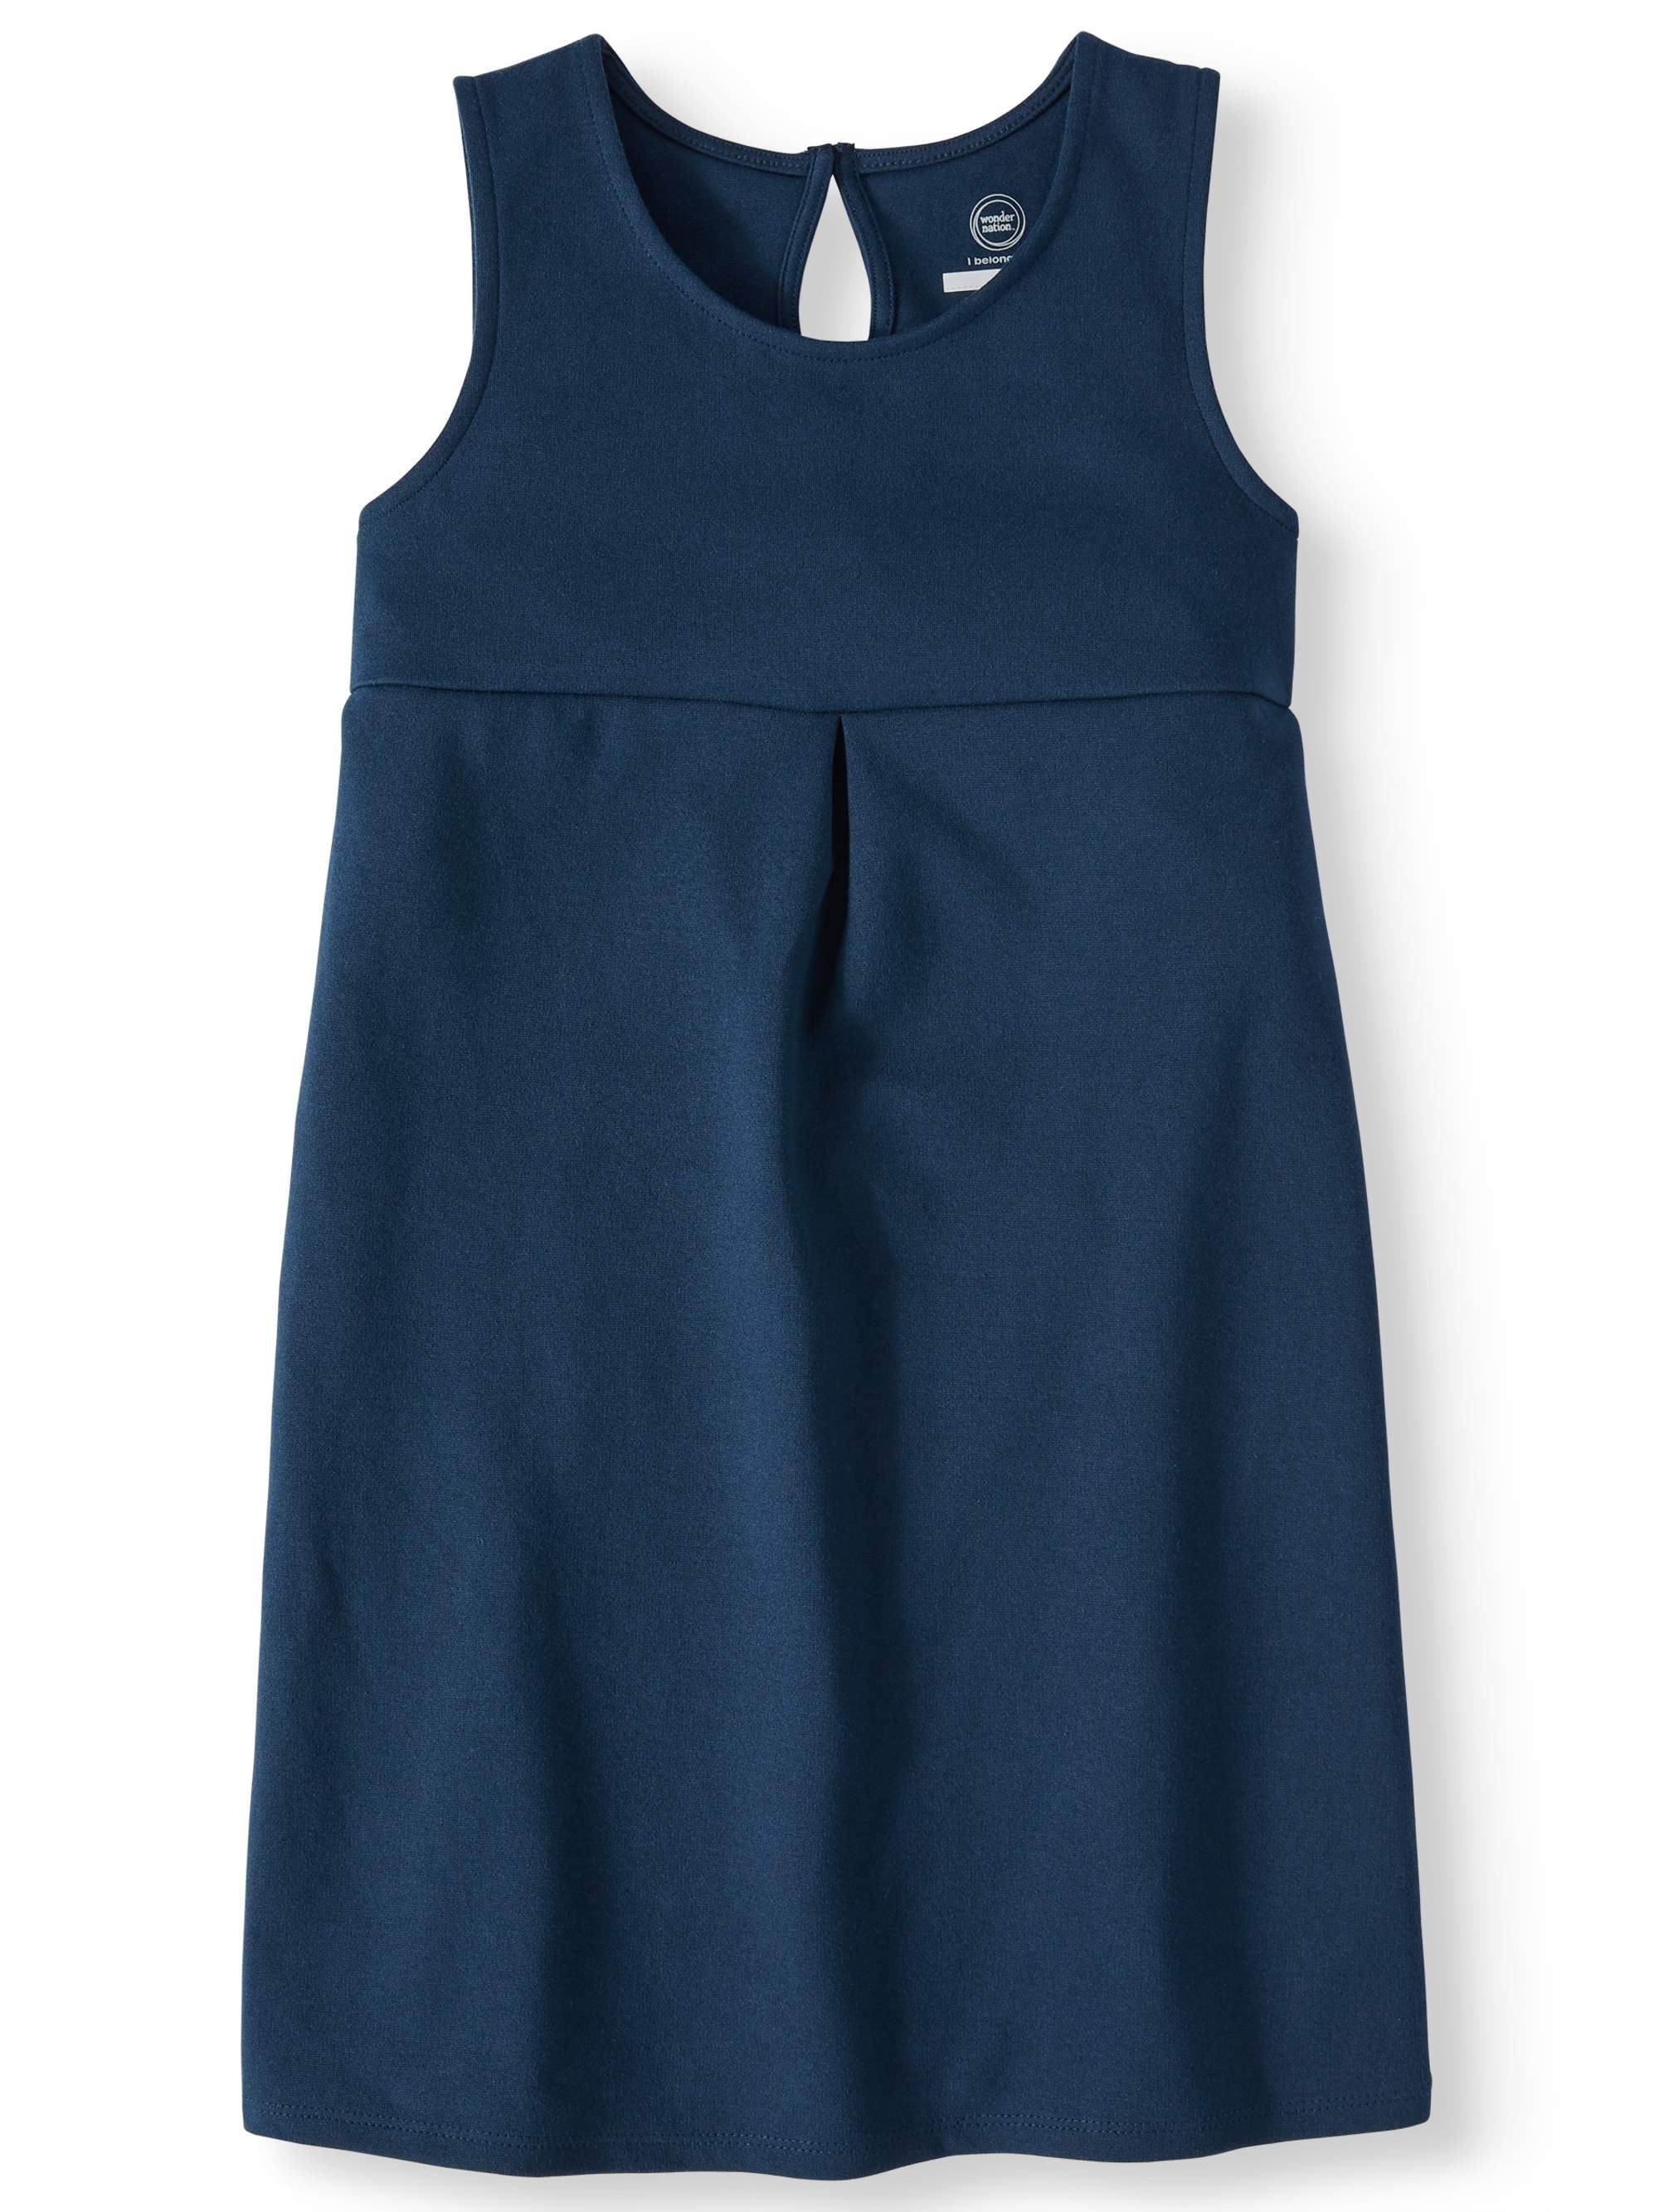 jumper dress size 16